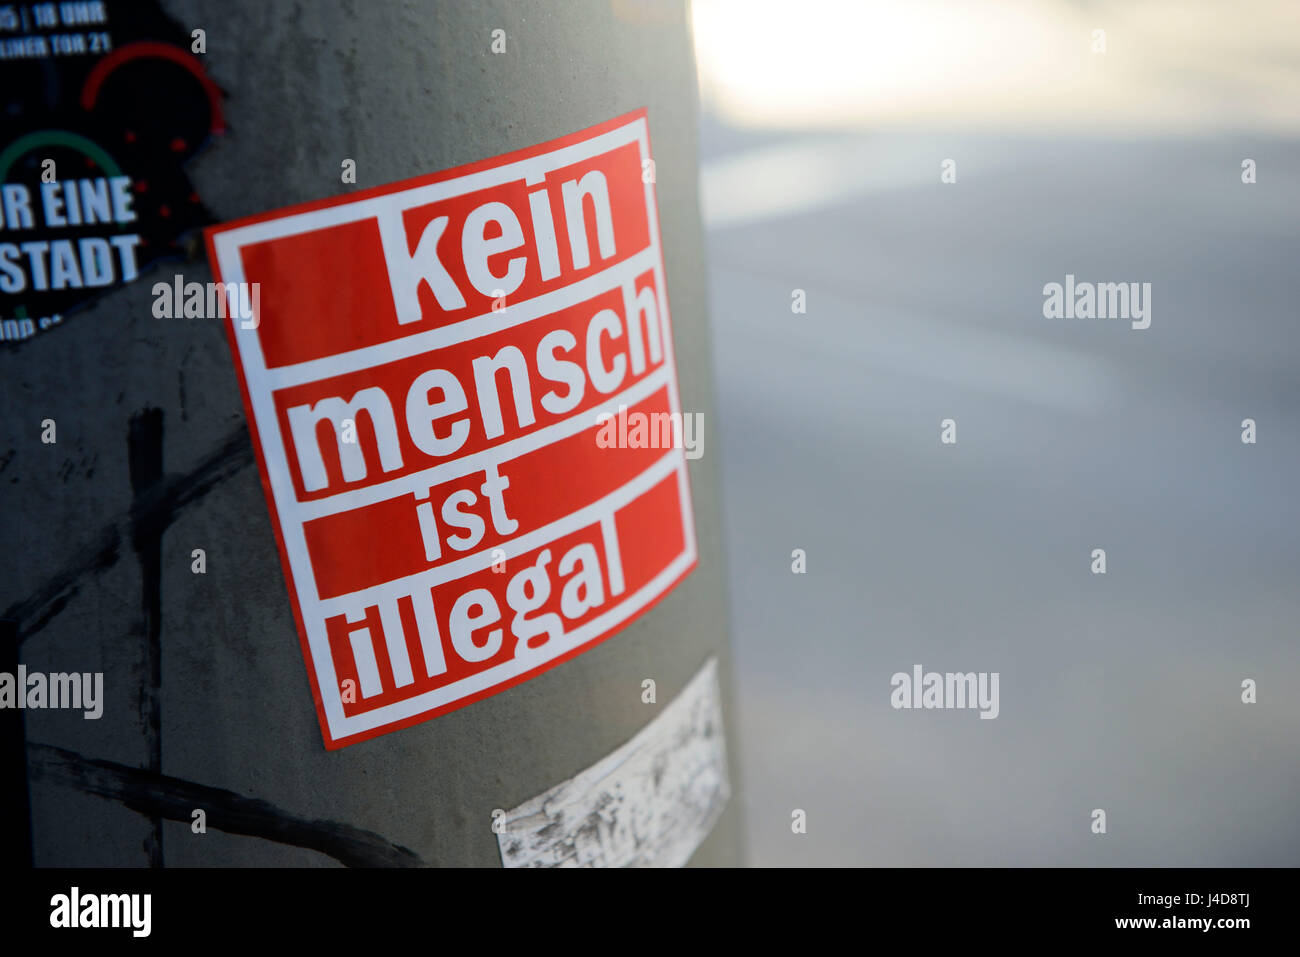 https://c8.alamy.com/comp/J4D8TJ/no-one-is-unlawful-sticker-in-hamburg-germany-europe-kein-mensch-ist-J4D8TJ.jpg